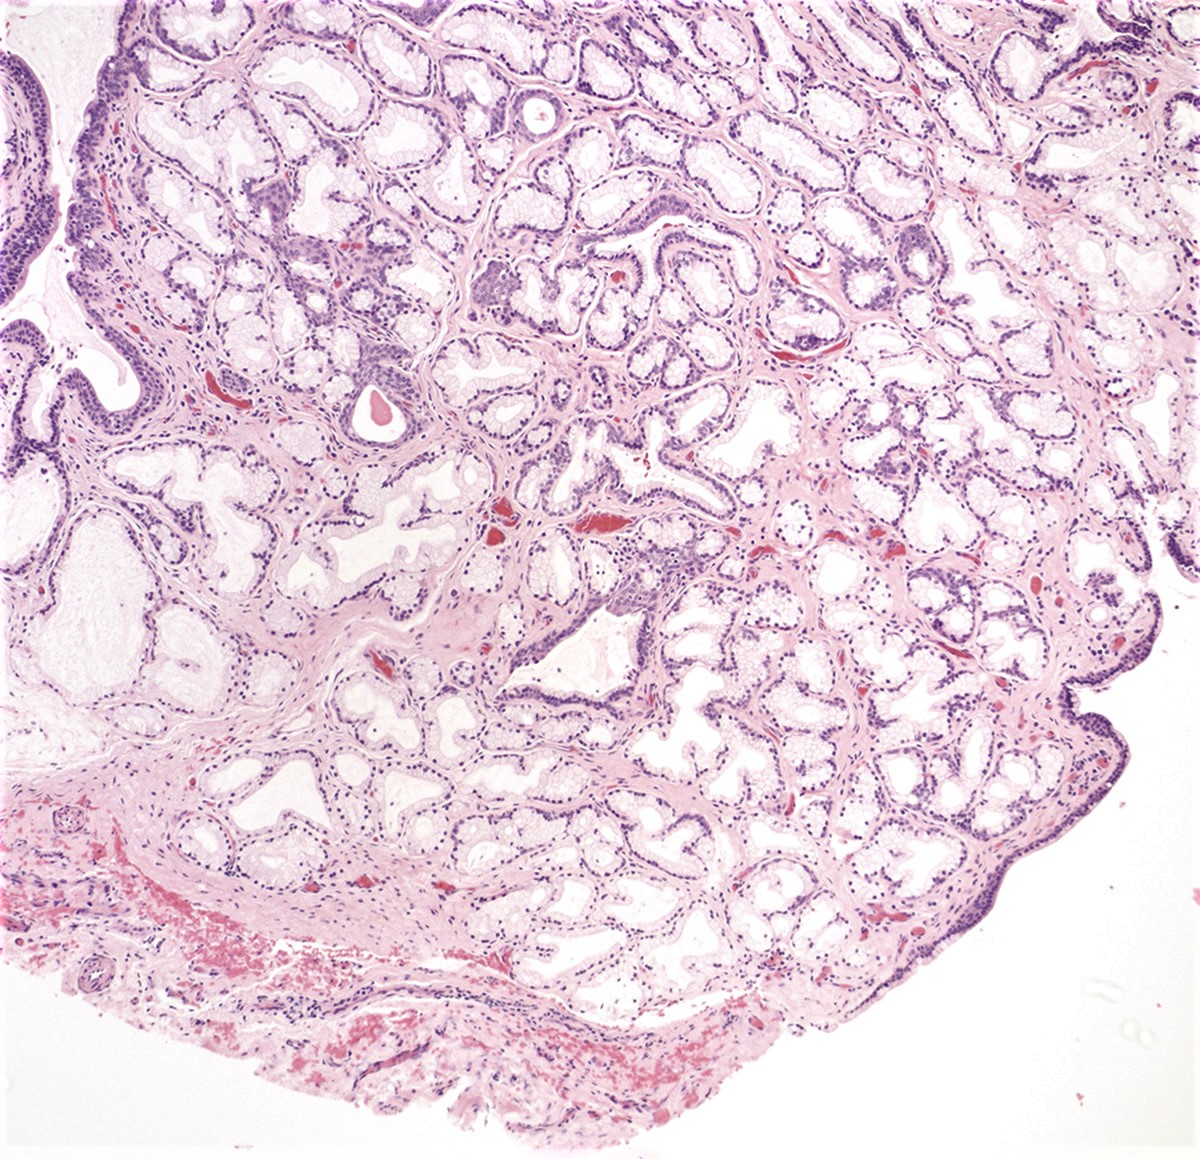 Bartholin cyst with adjacent Bartholin glands